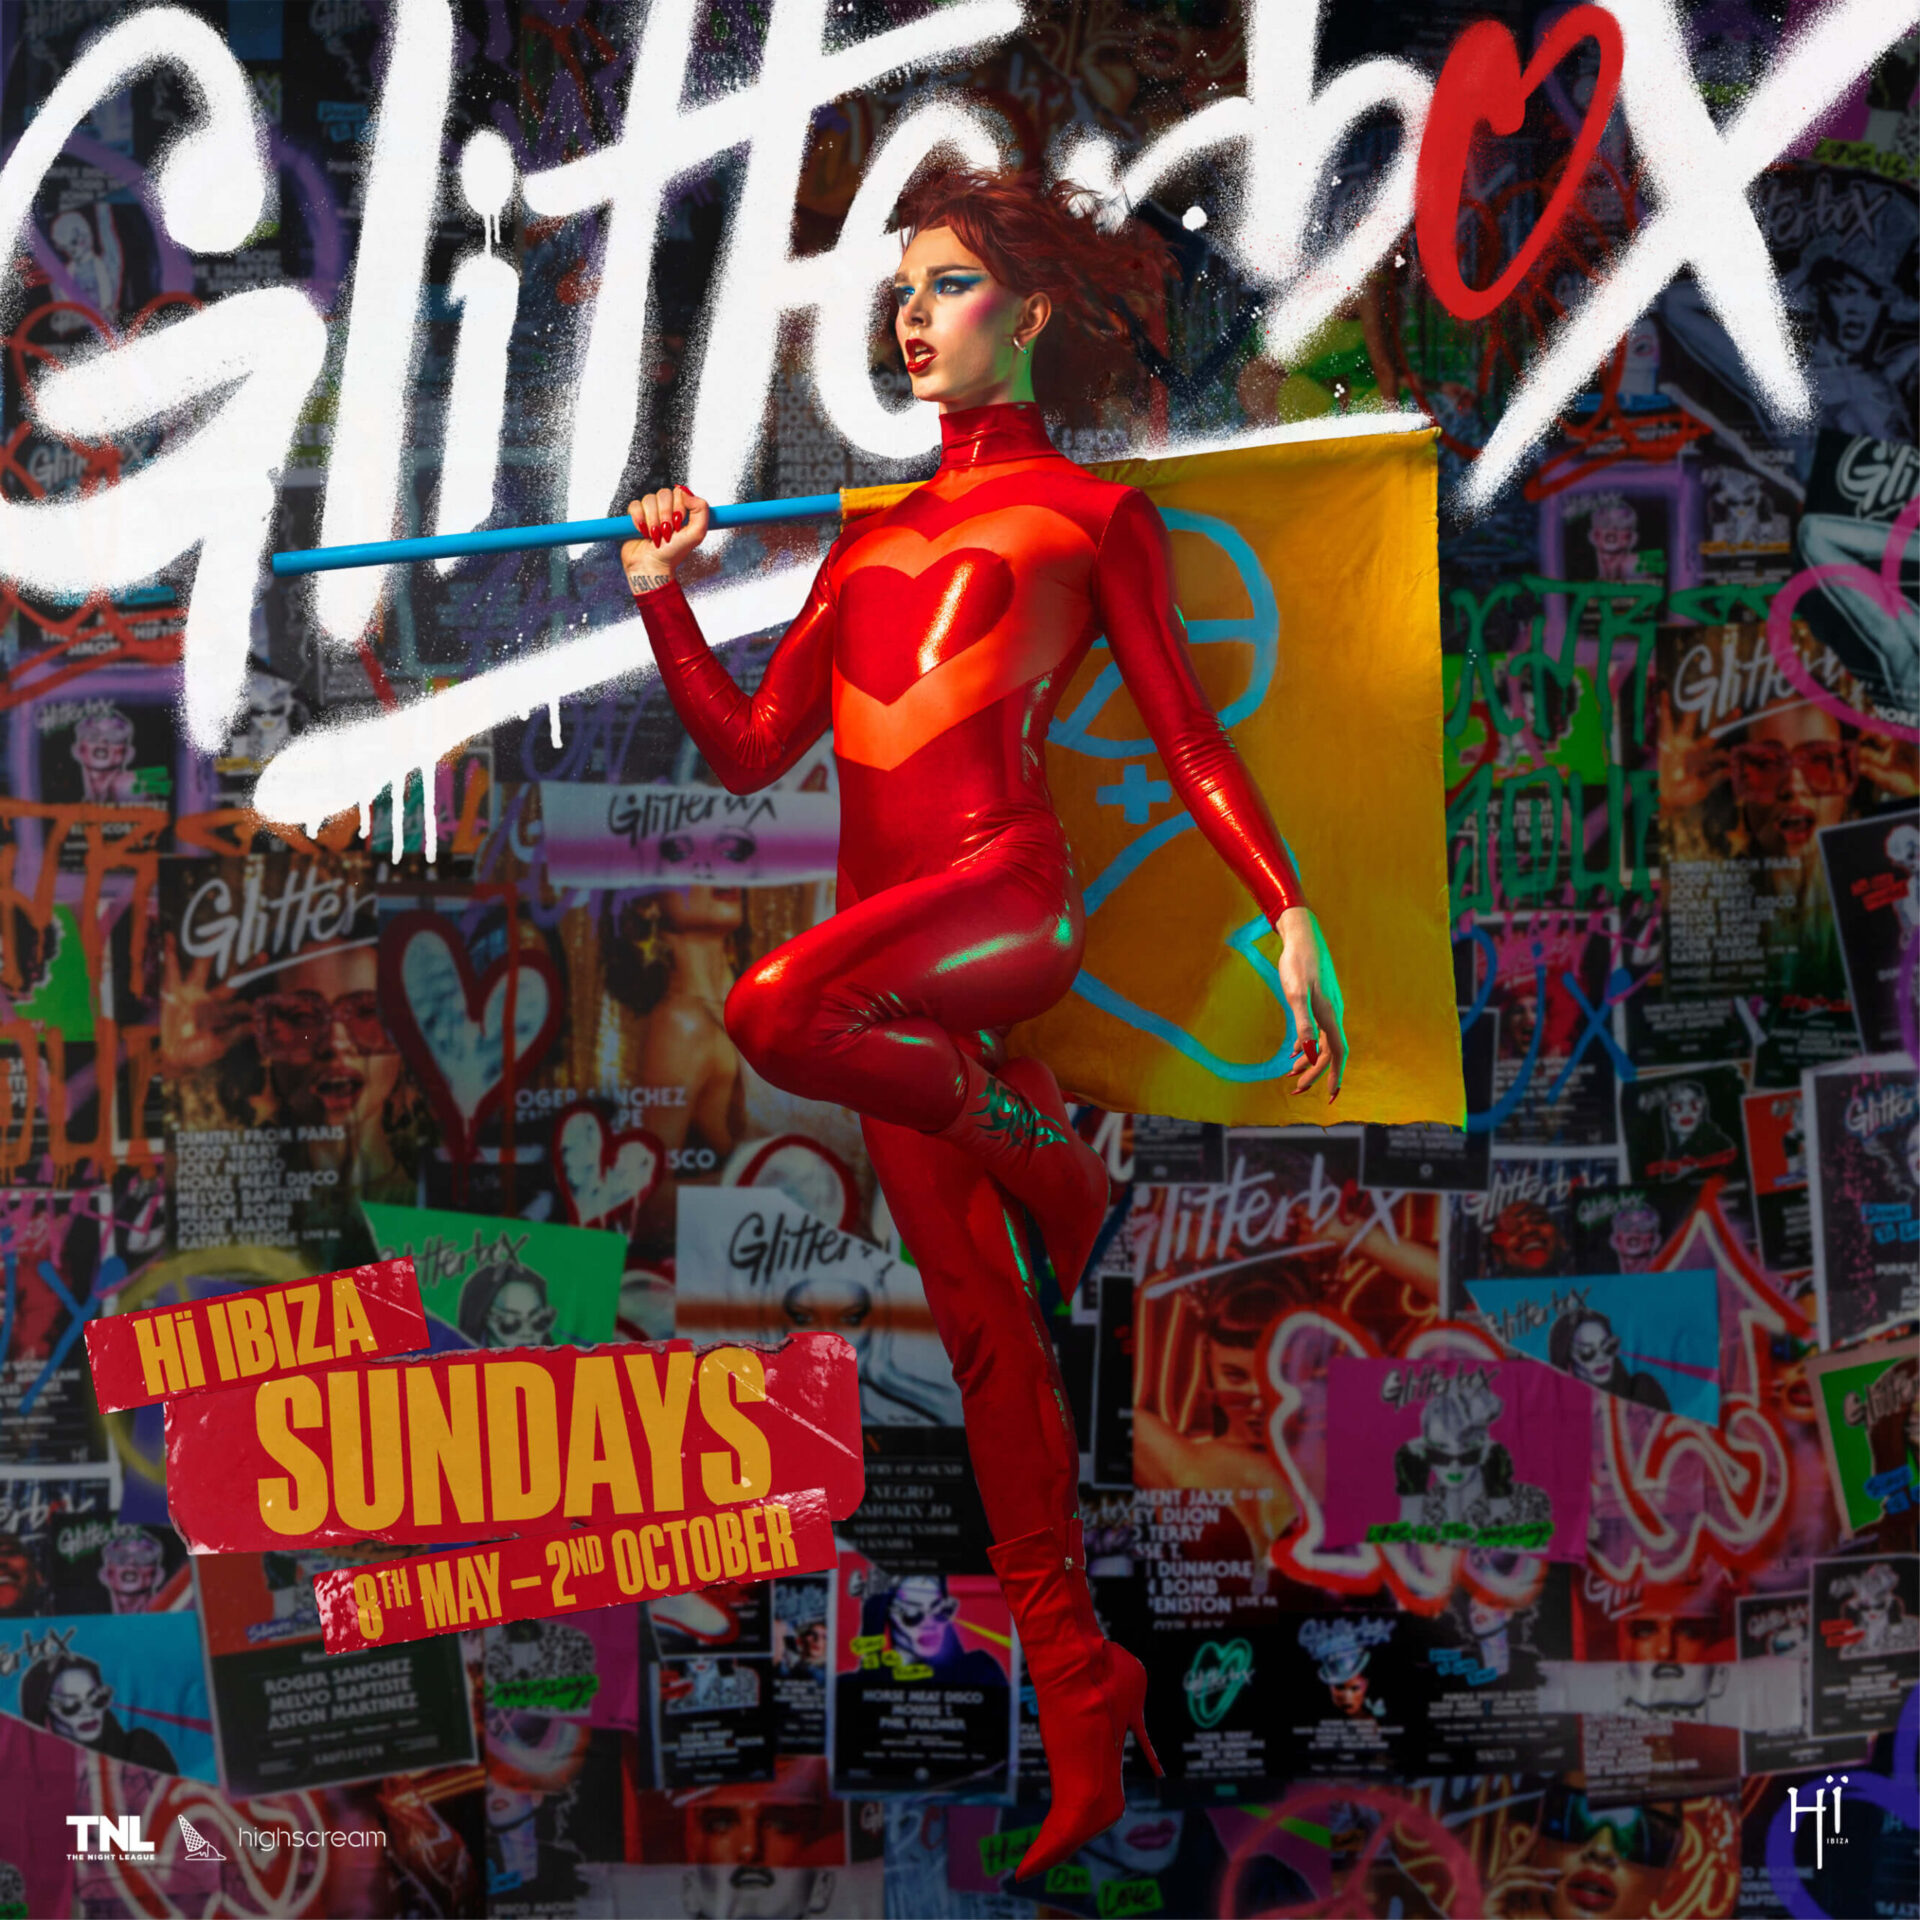 Glitterbox’s new season is starting now at HÏ Ibiza !